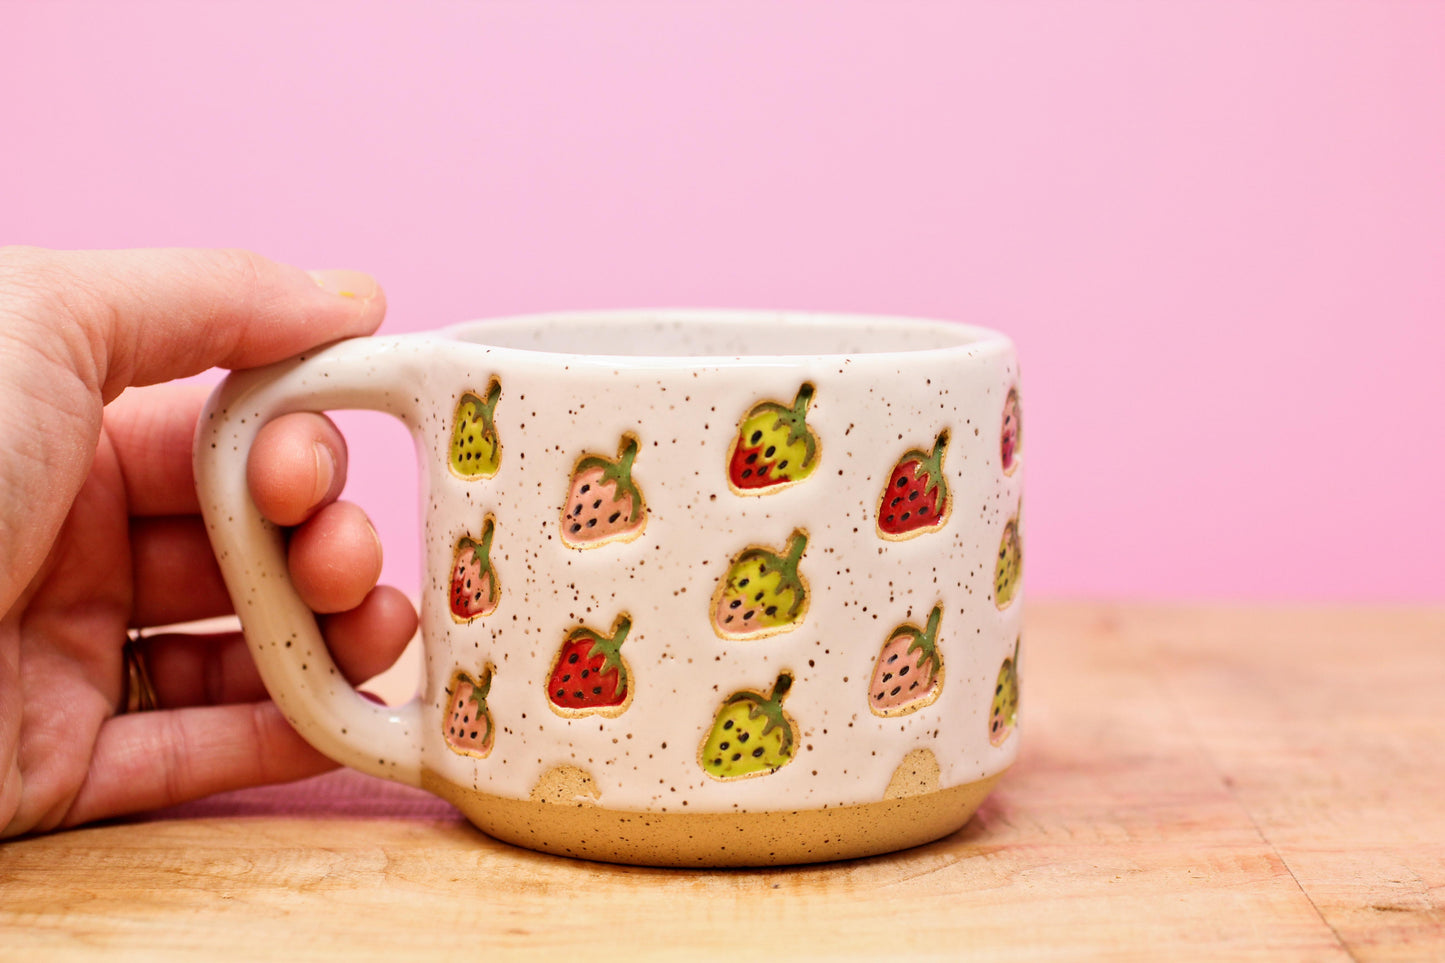 Strawberry Stamped Mug #20- (12.5 oz.)